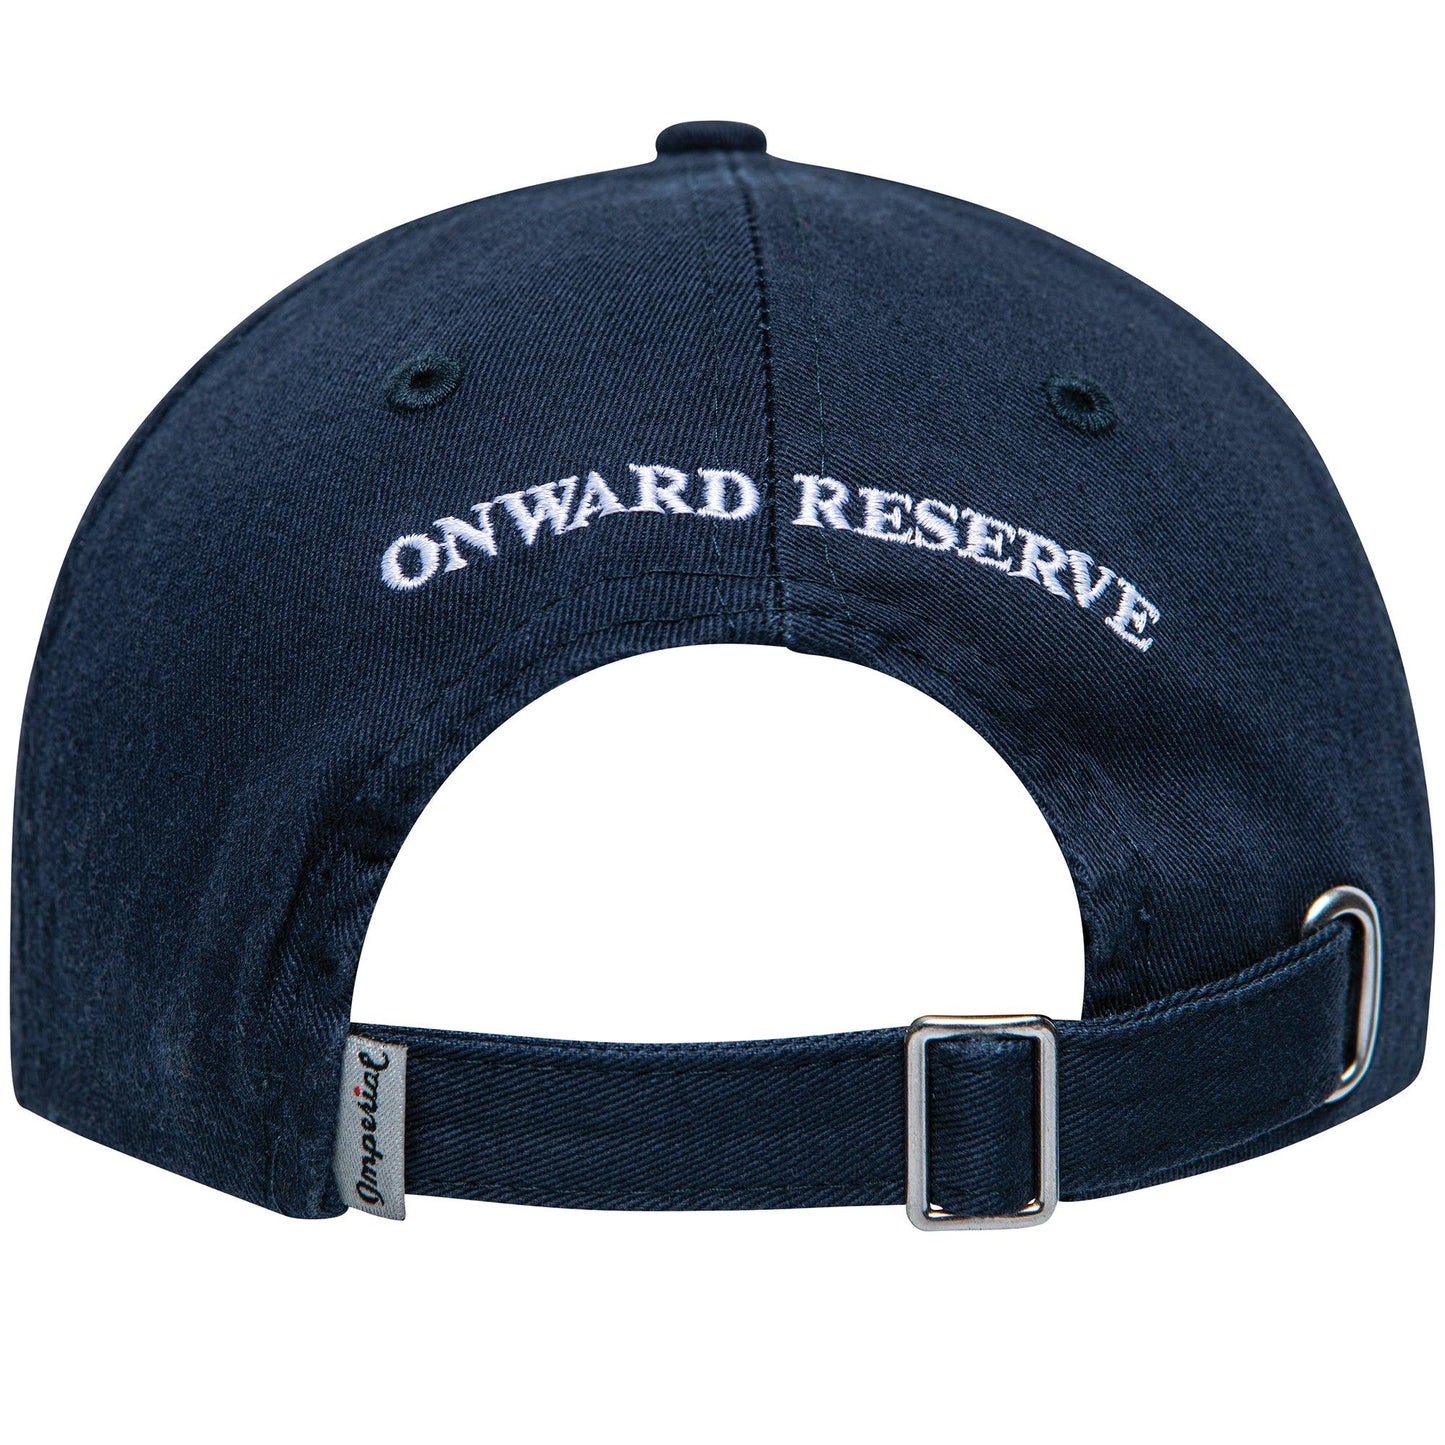 Pennant Hat - Onward Reserve